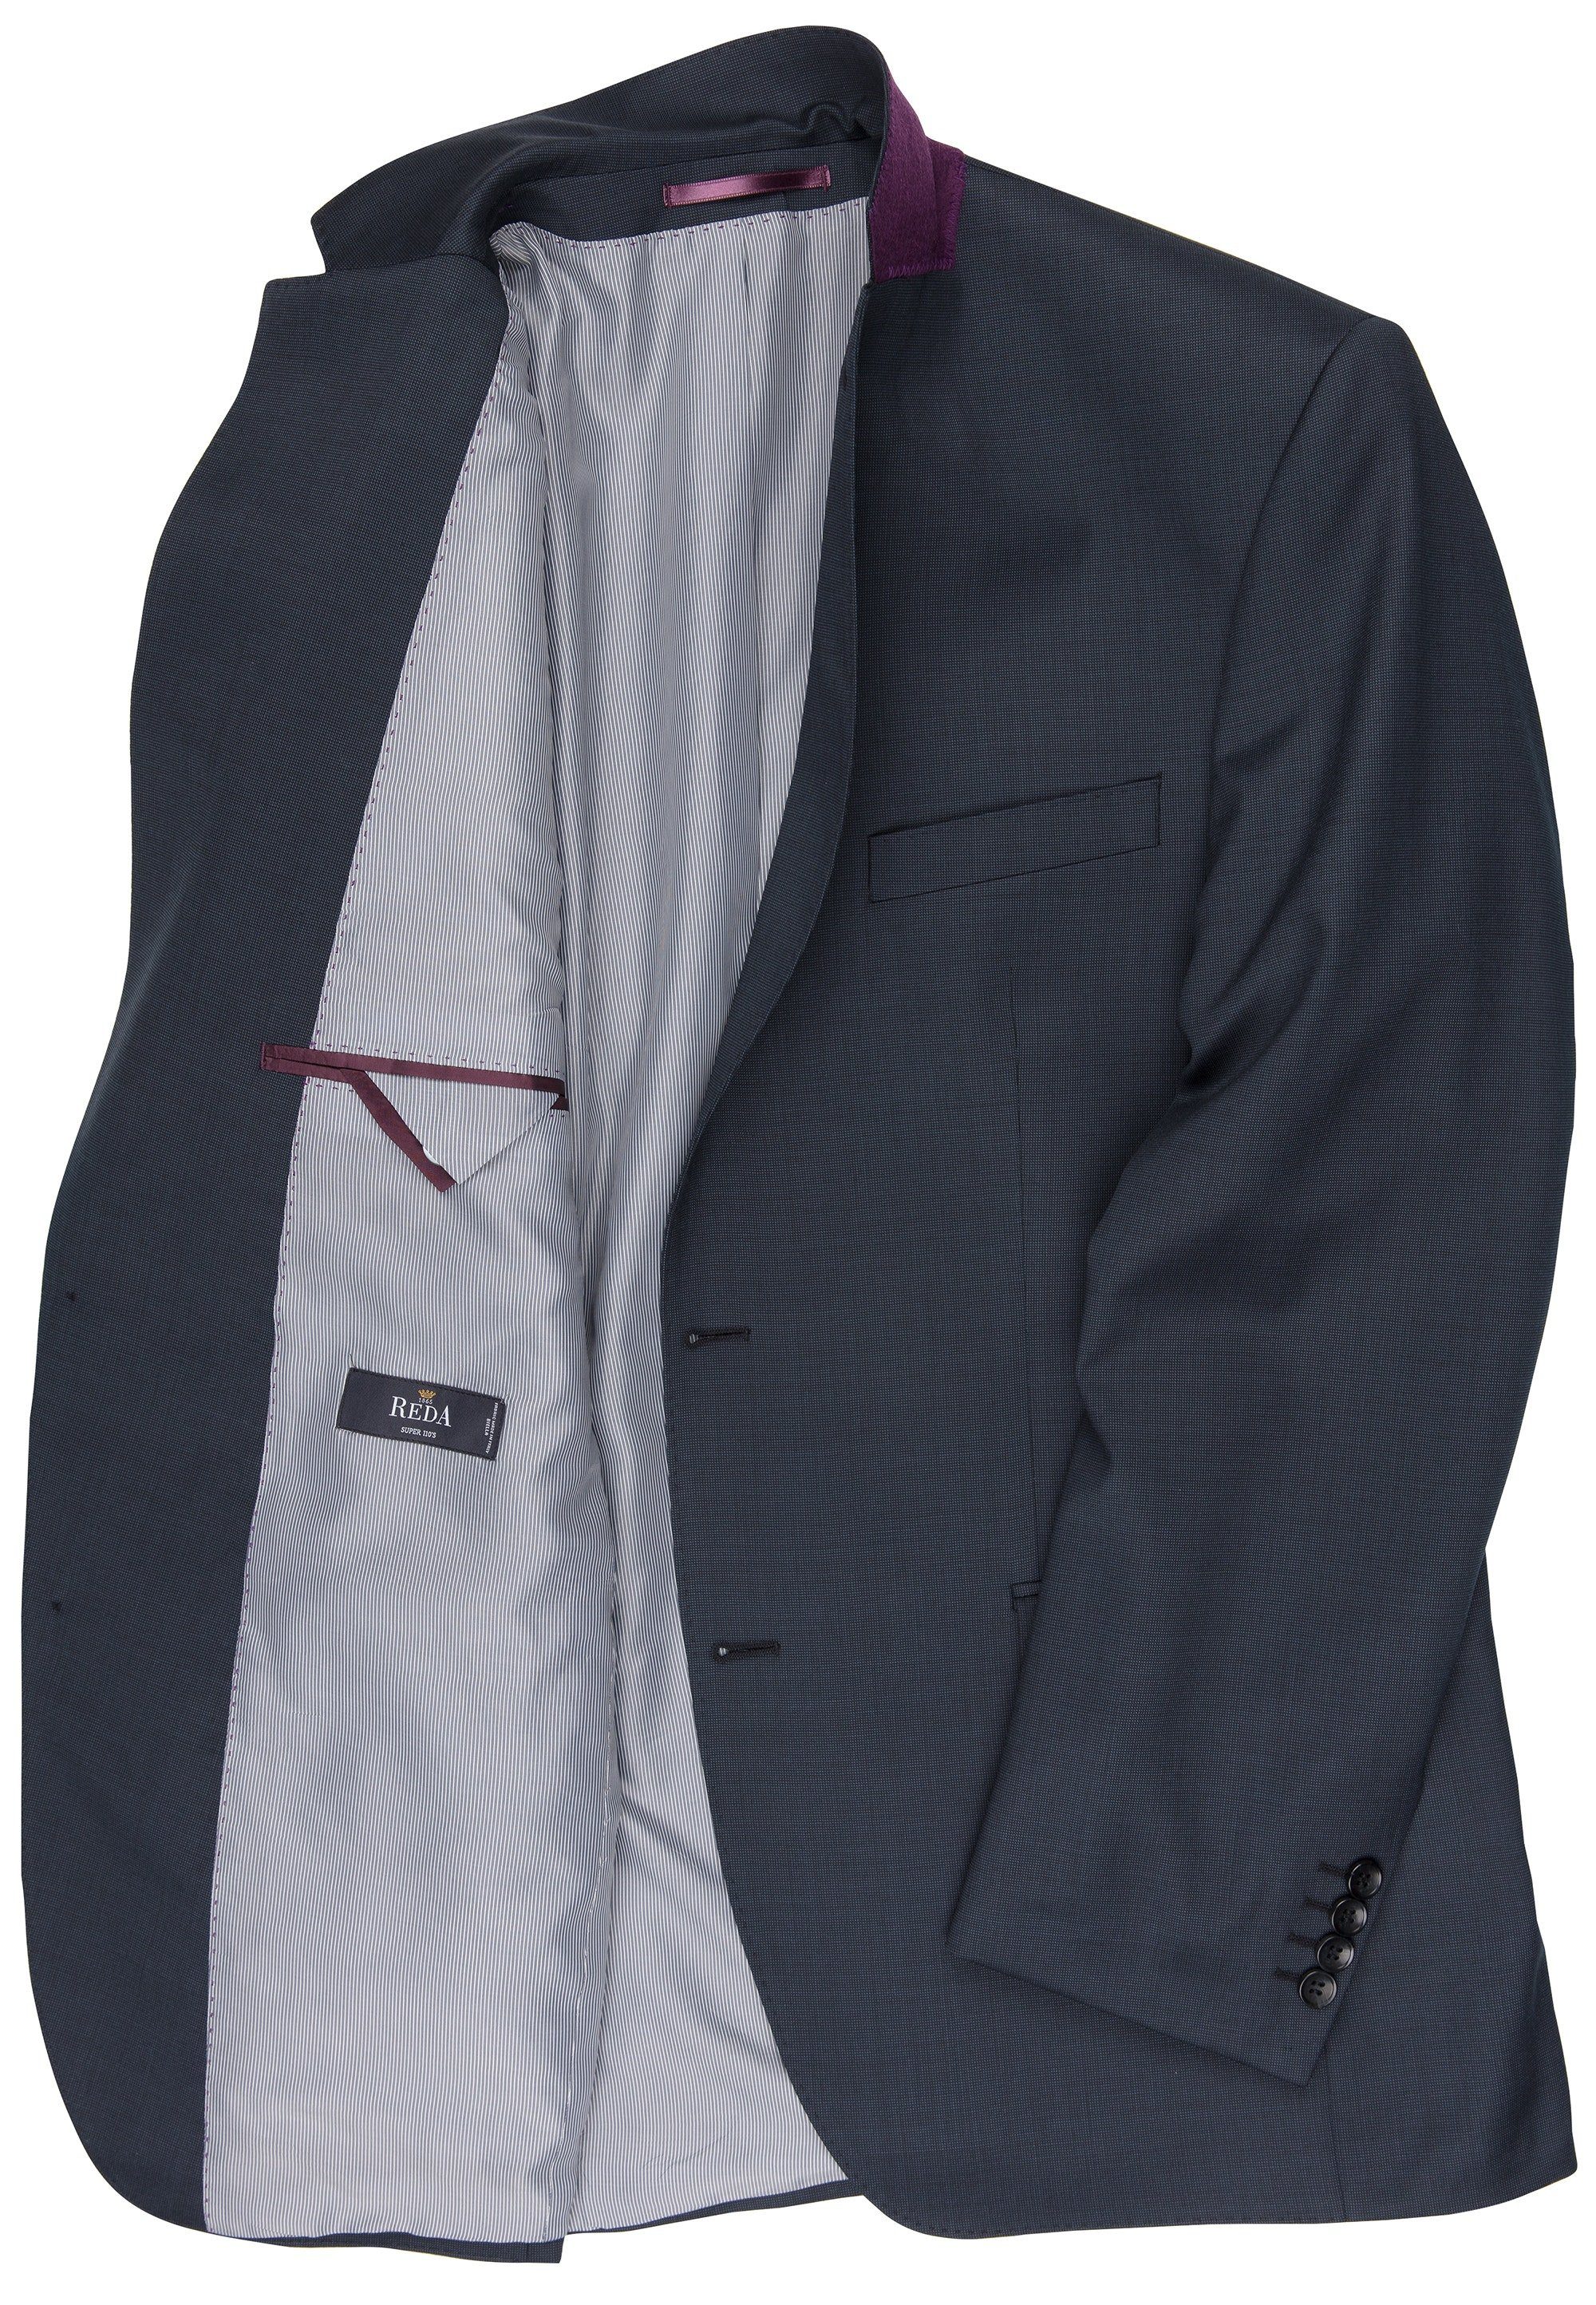 Sakko Gross Shane dunkelblau Carl SS Sakko/jacket